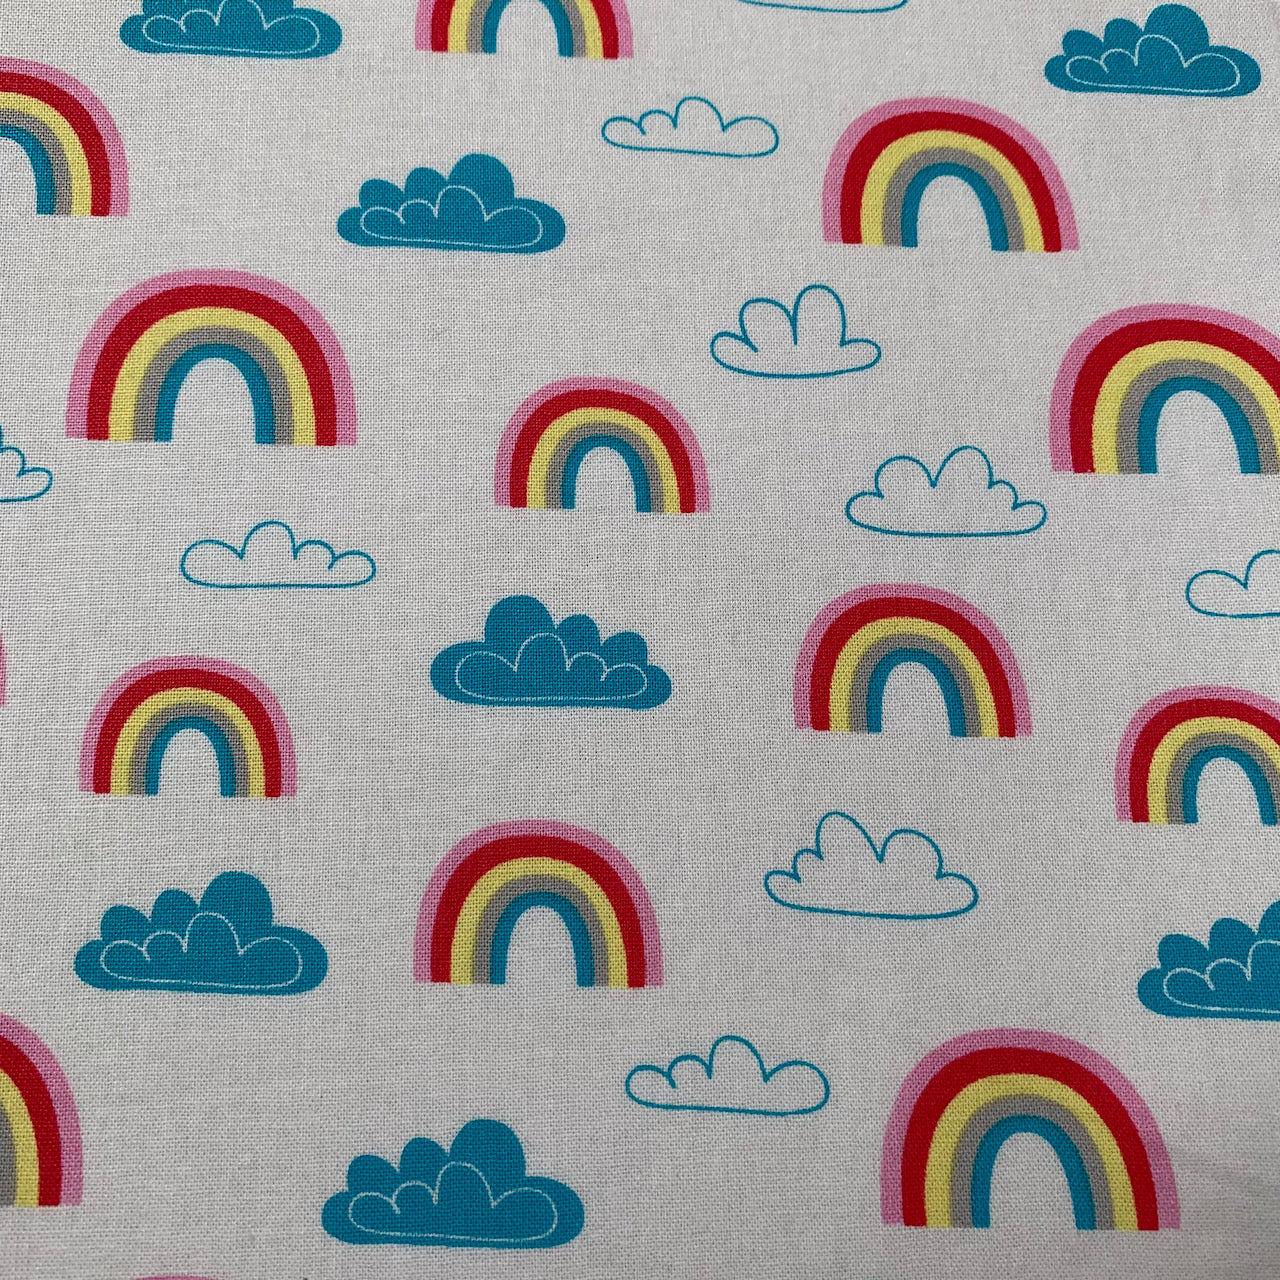 Fabric Felt Sheet - Rainbows